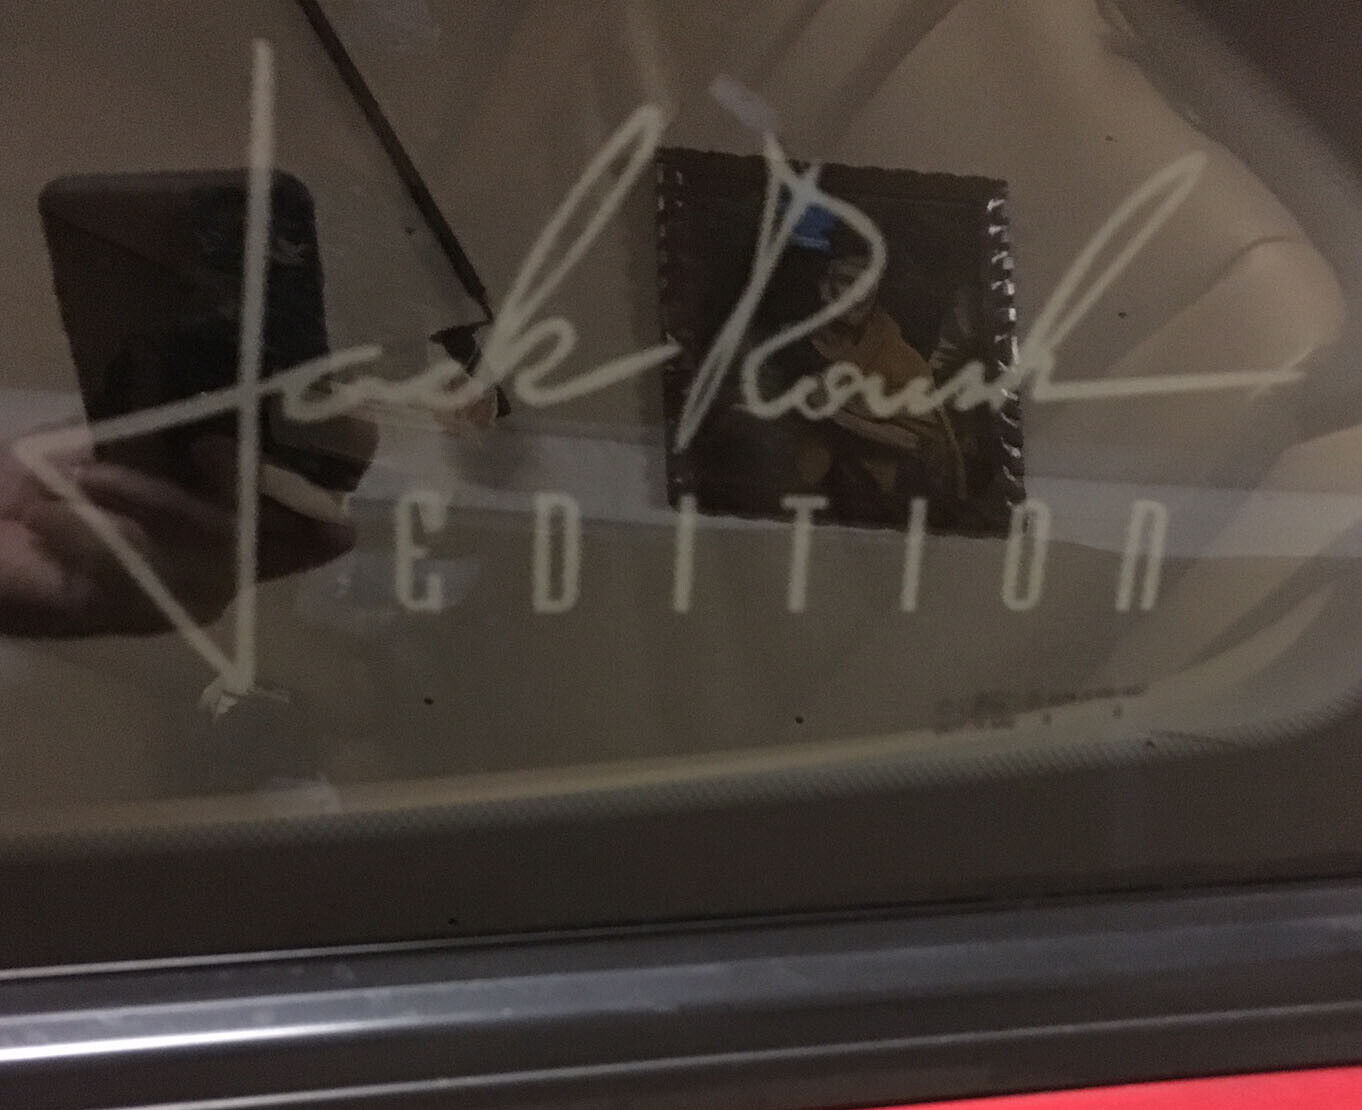 94-04 Mustang Roush edition side window quarter vinyl sticker decals Pair (2)